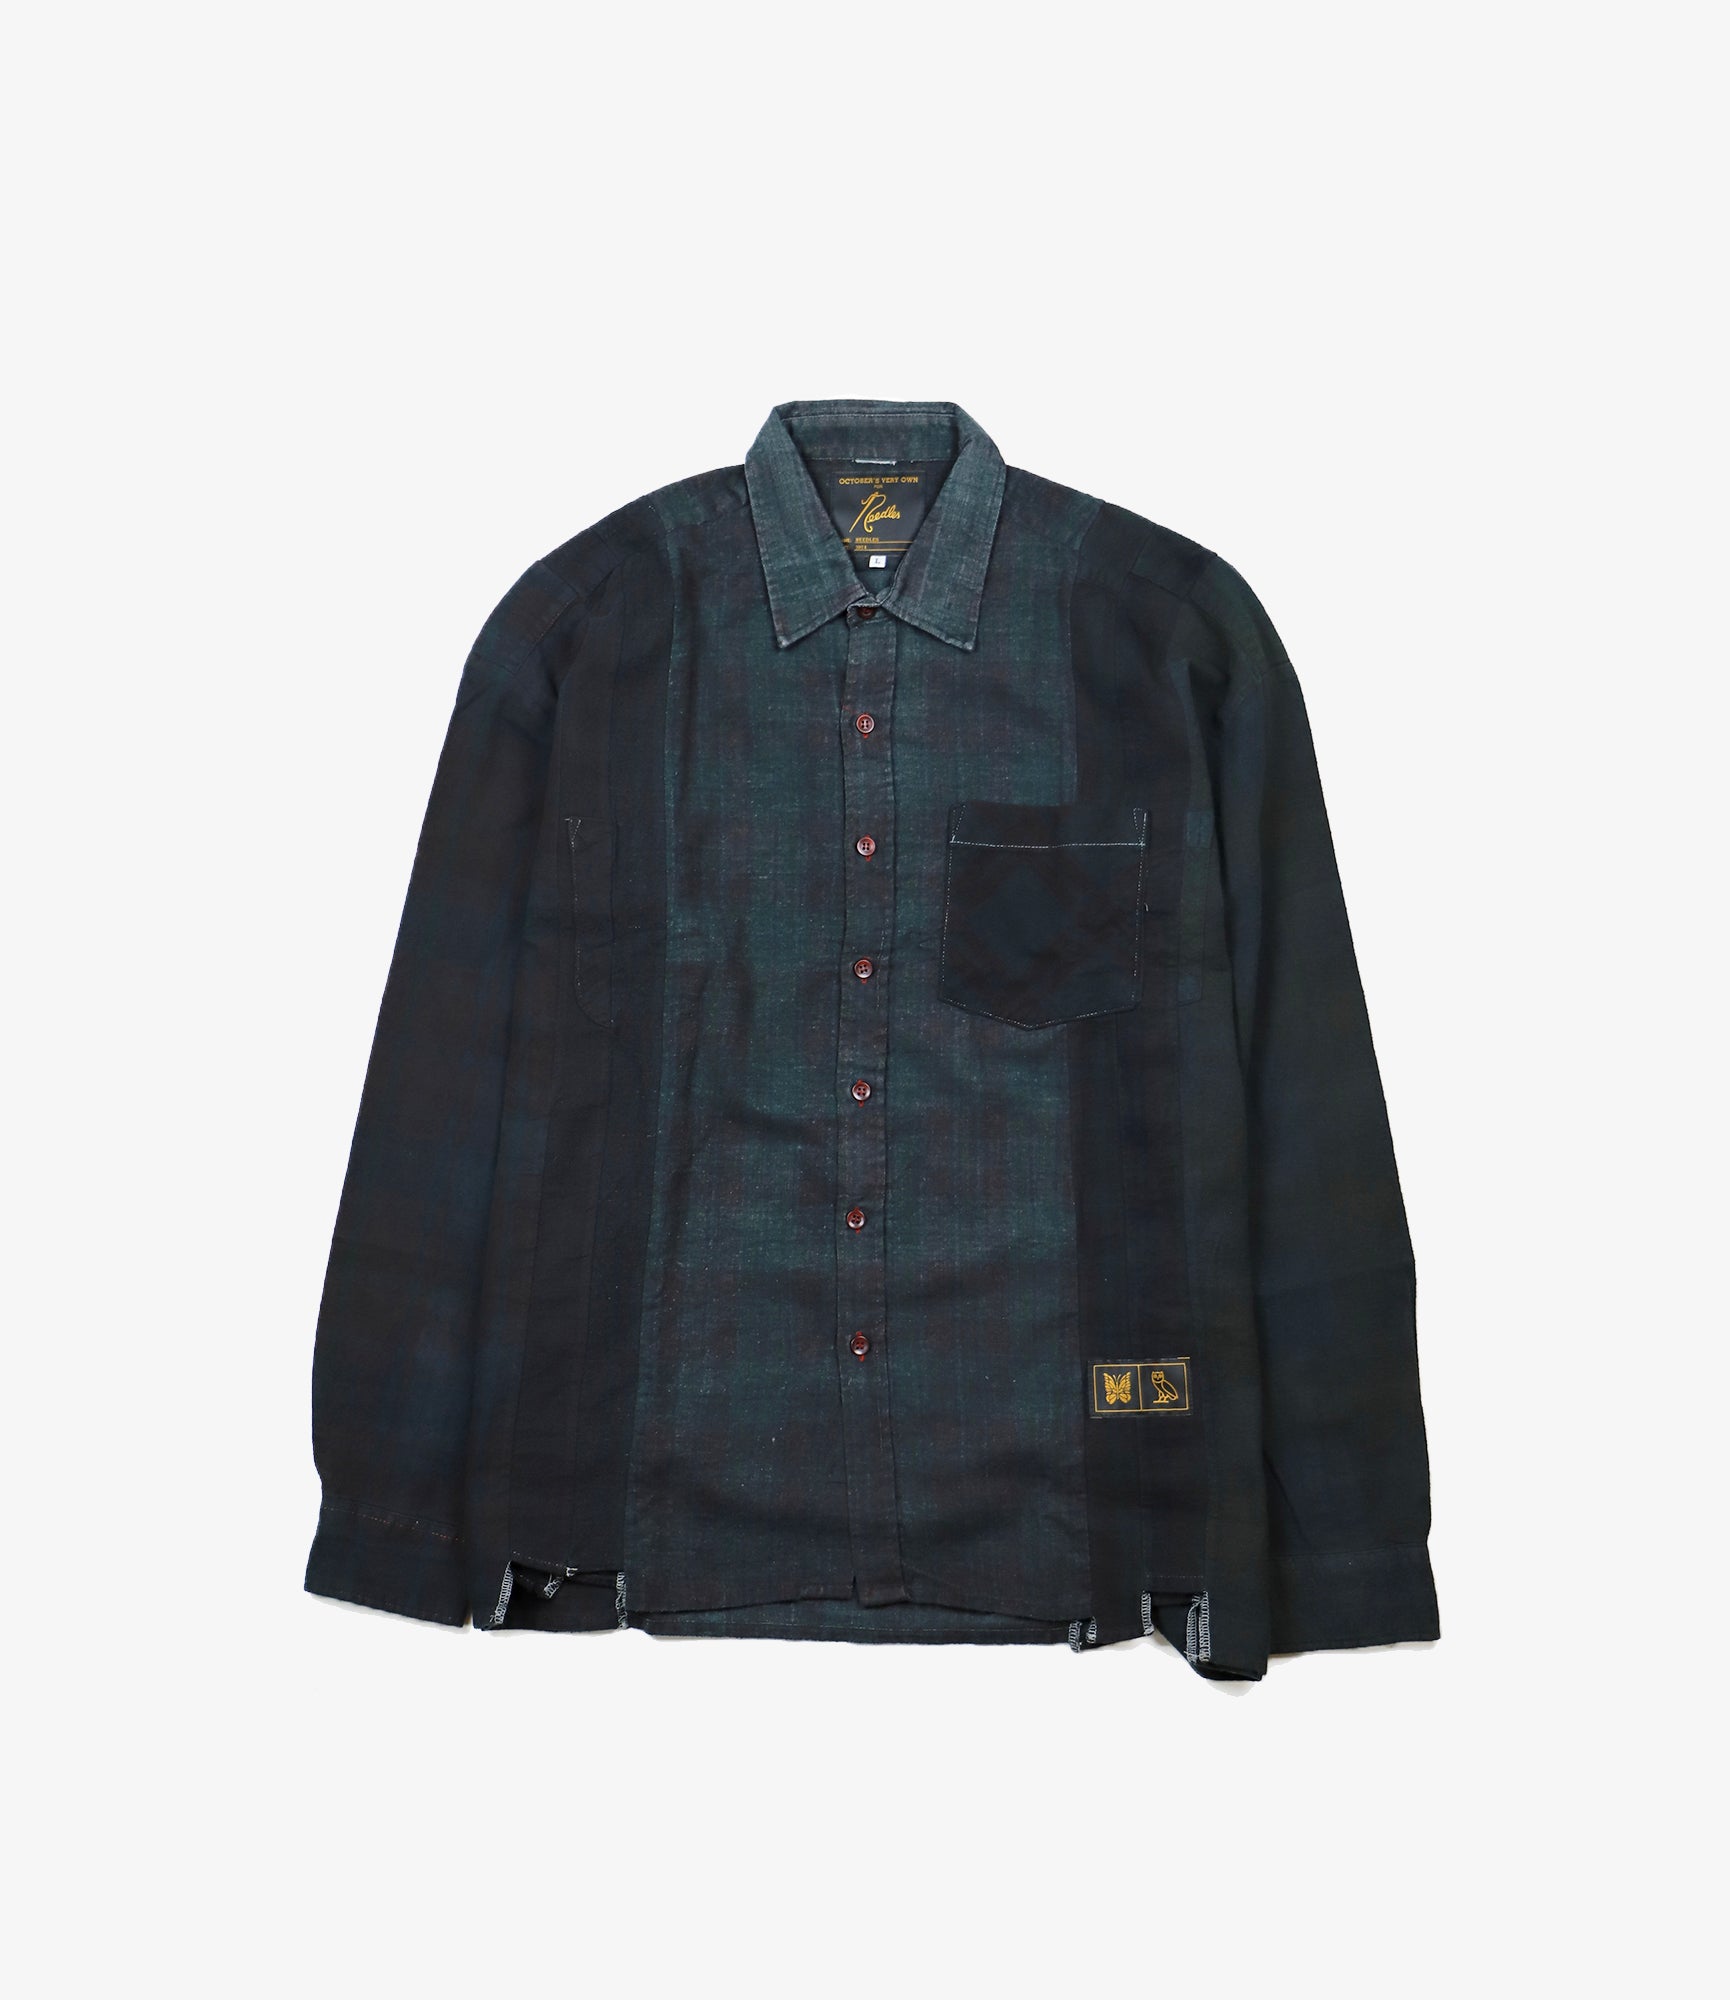 Needles x OVO Flannel Shirt - 7 Cuts / Over Dye - Black